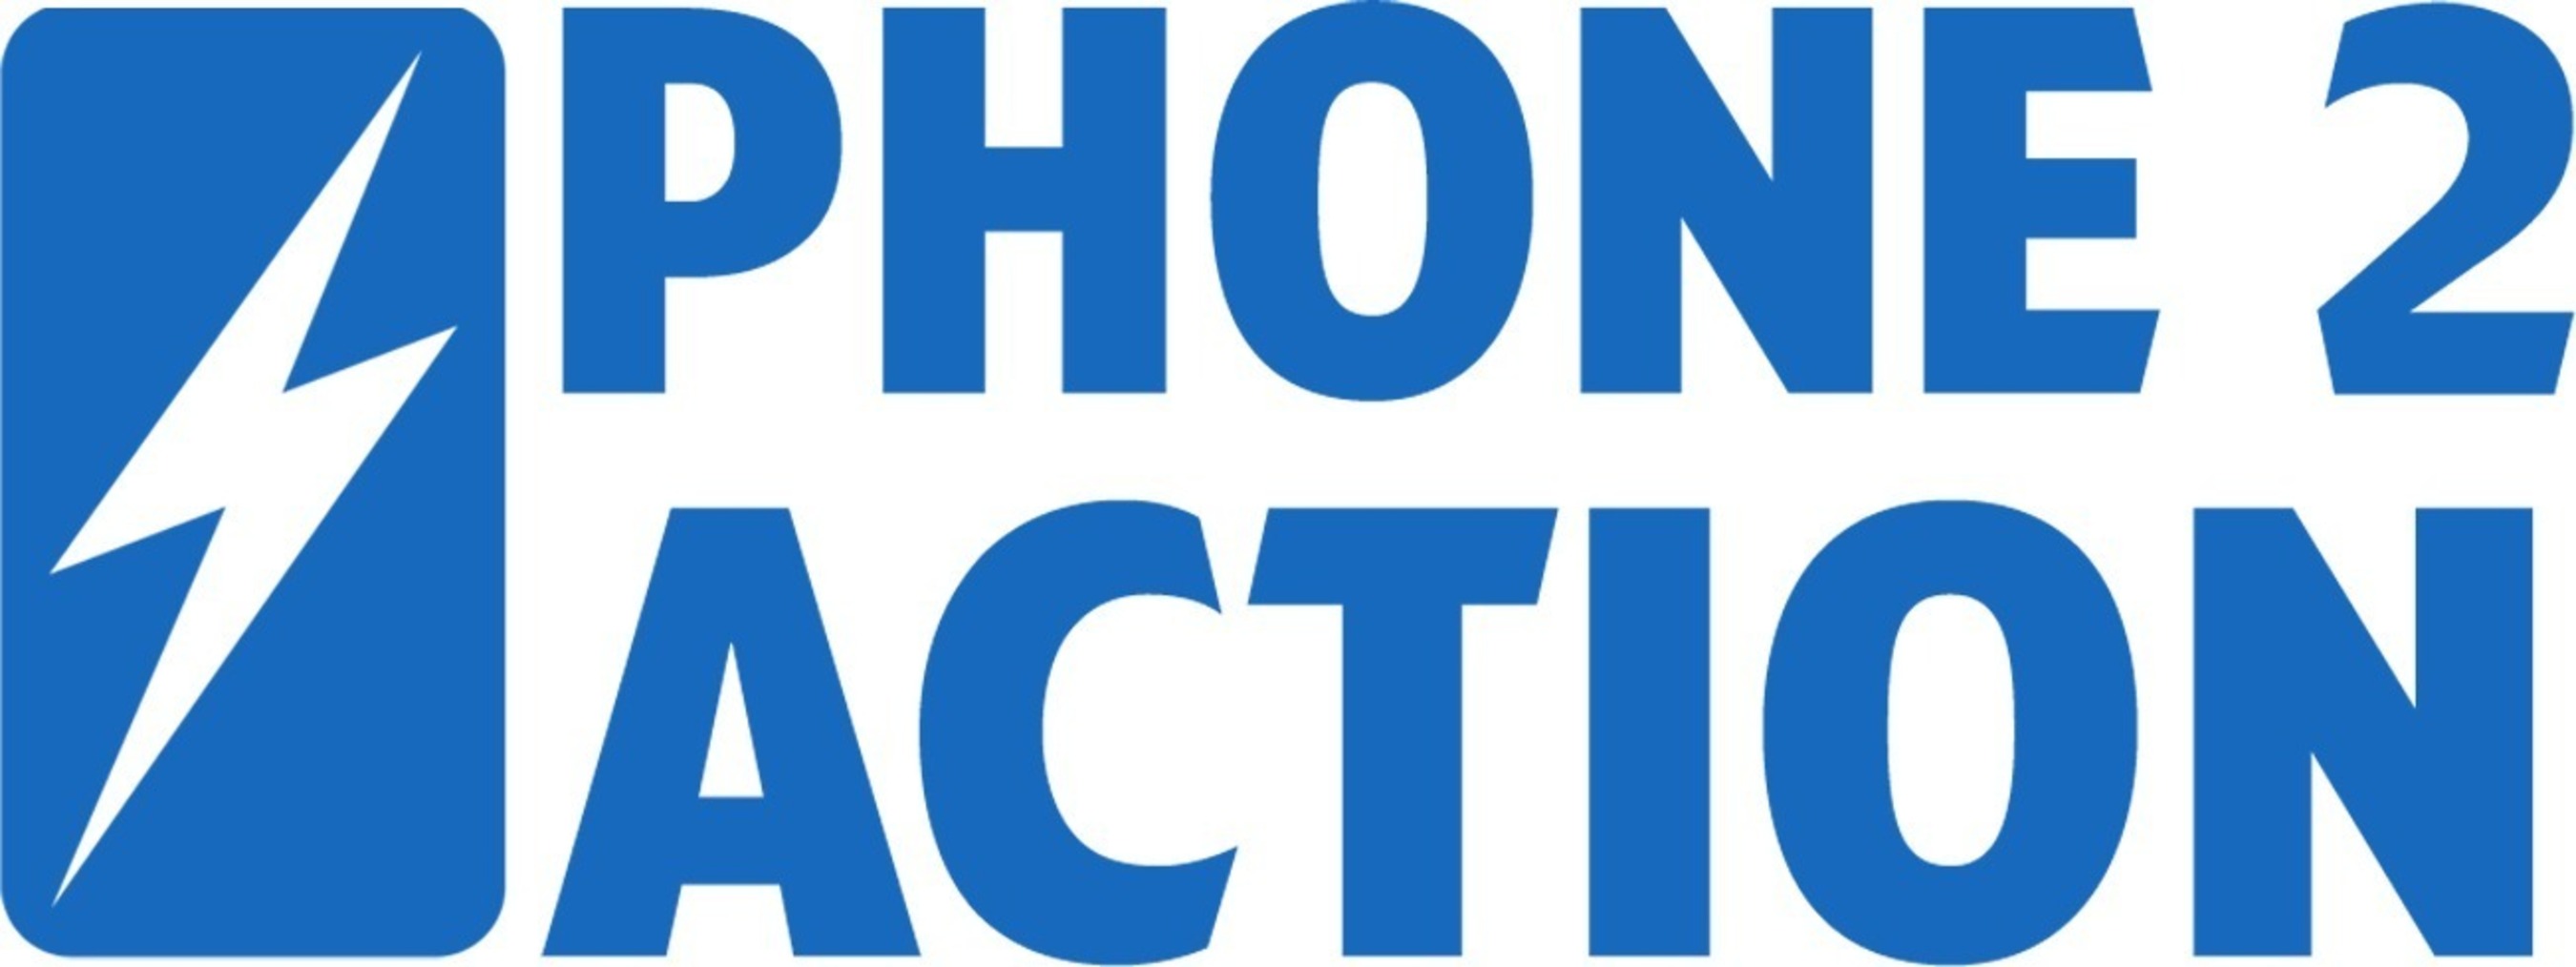 Phone2Action logo (PRNewsFoto/Phone2Action)